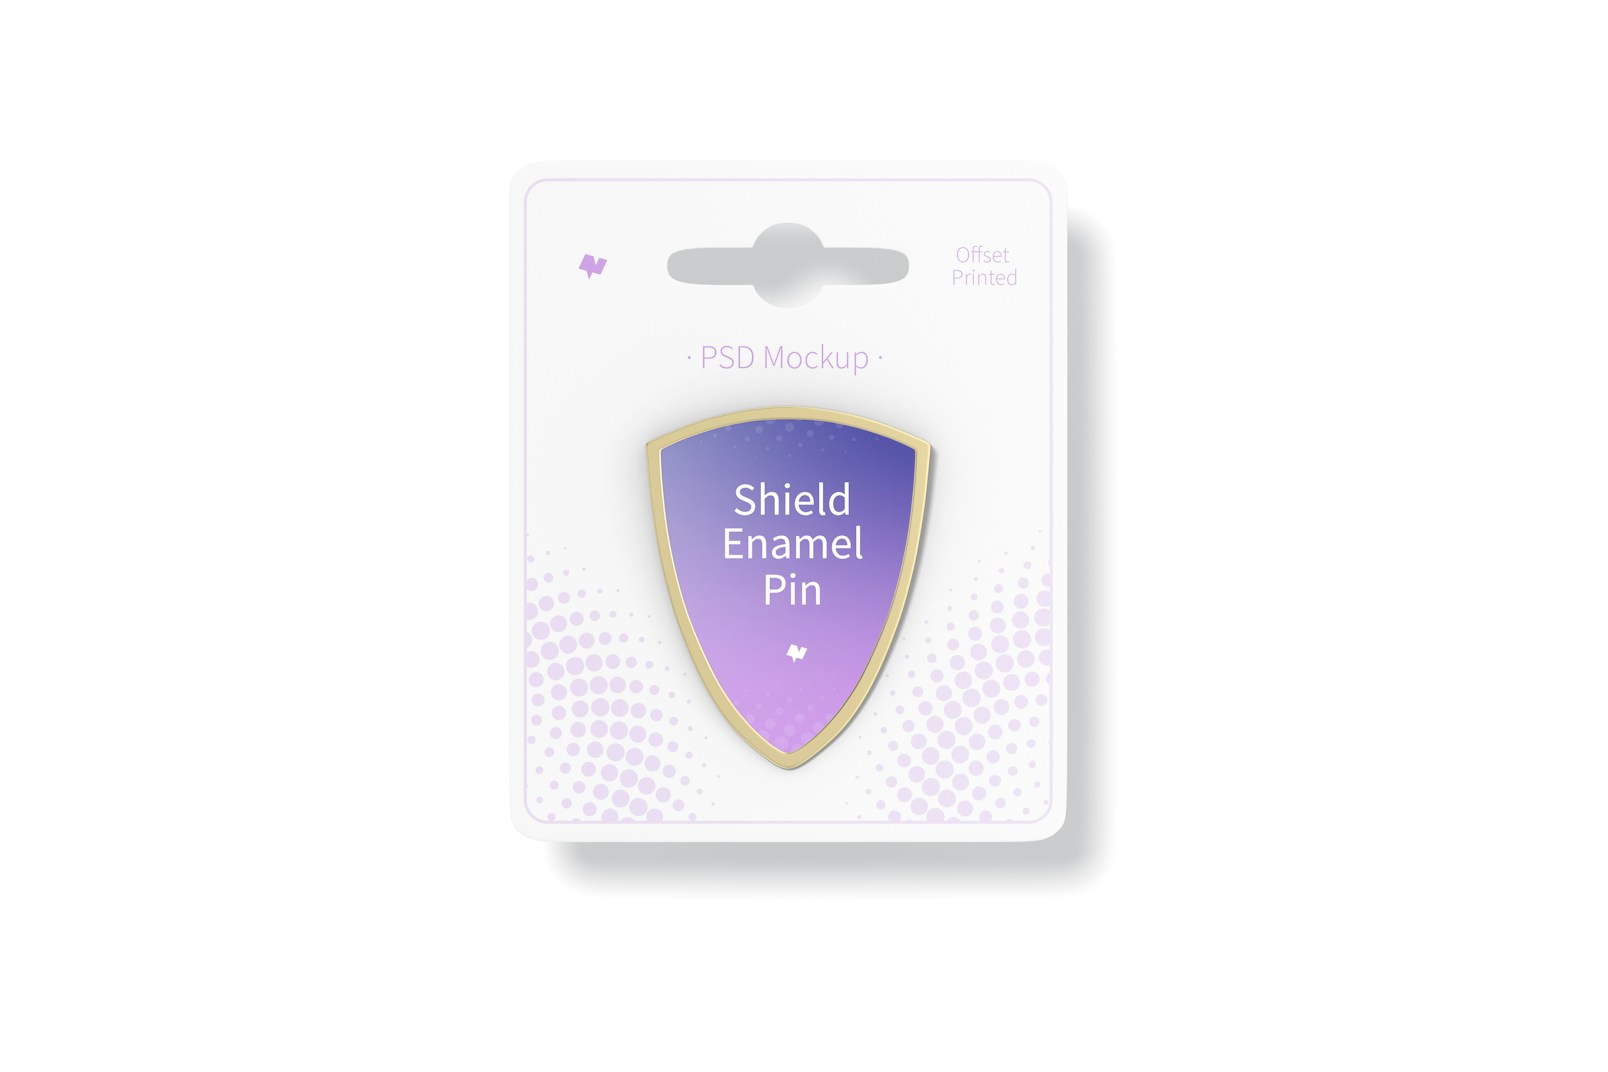 Shield Enamel Pin Mockup, Front View